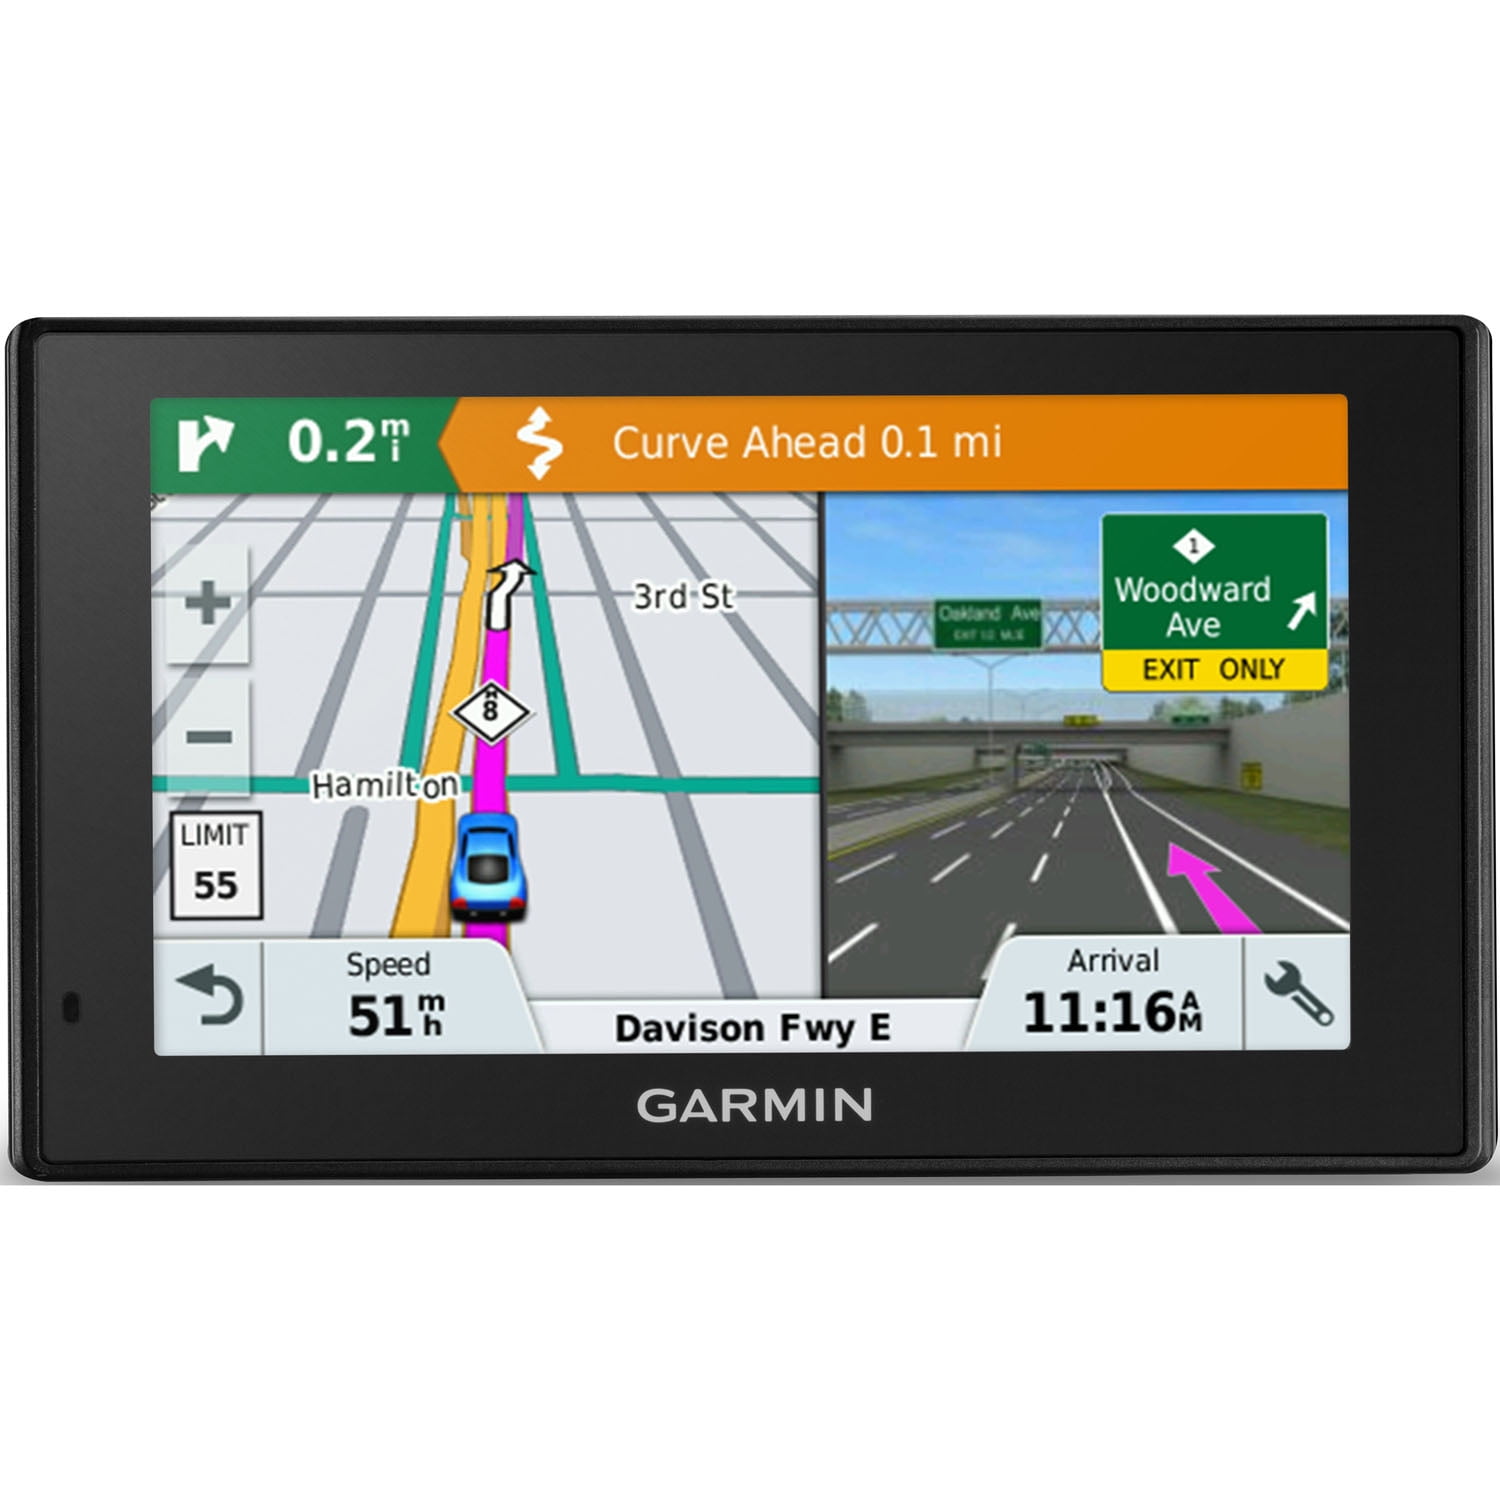 Garmin Drive Smart 51 GPS Navigator with Built-In WiFi plus Lifetime of America - Walmart.com